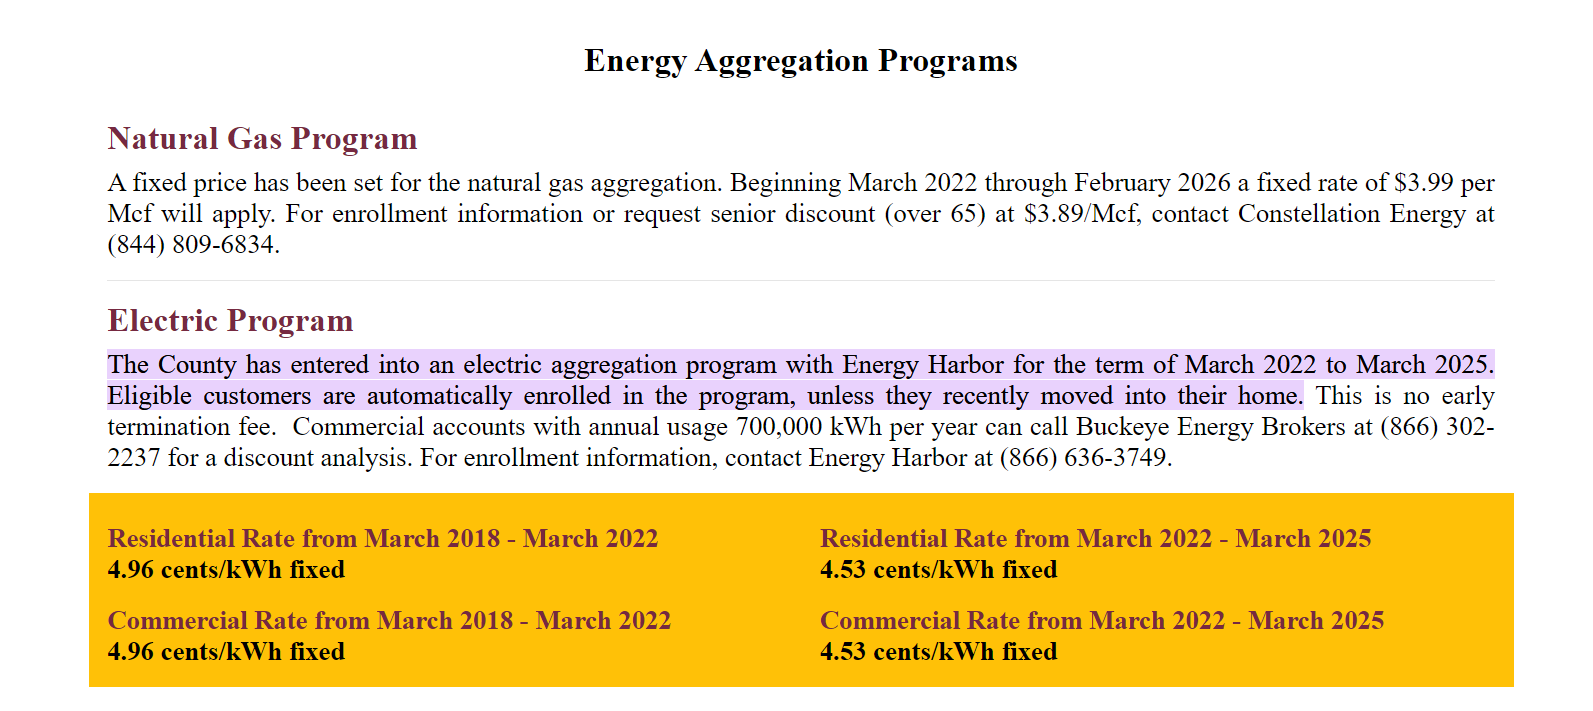 Champion Township Energy Aggregation Programs